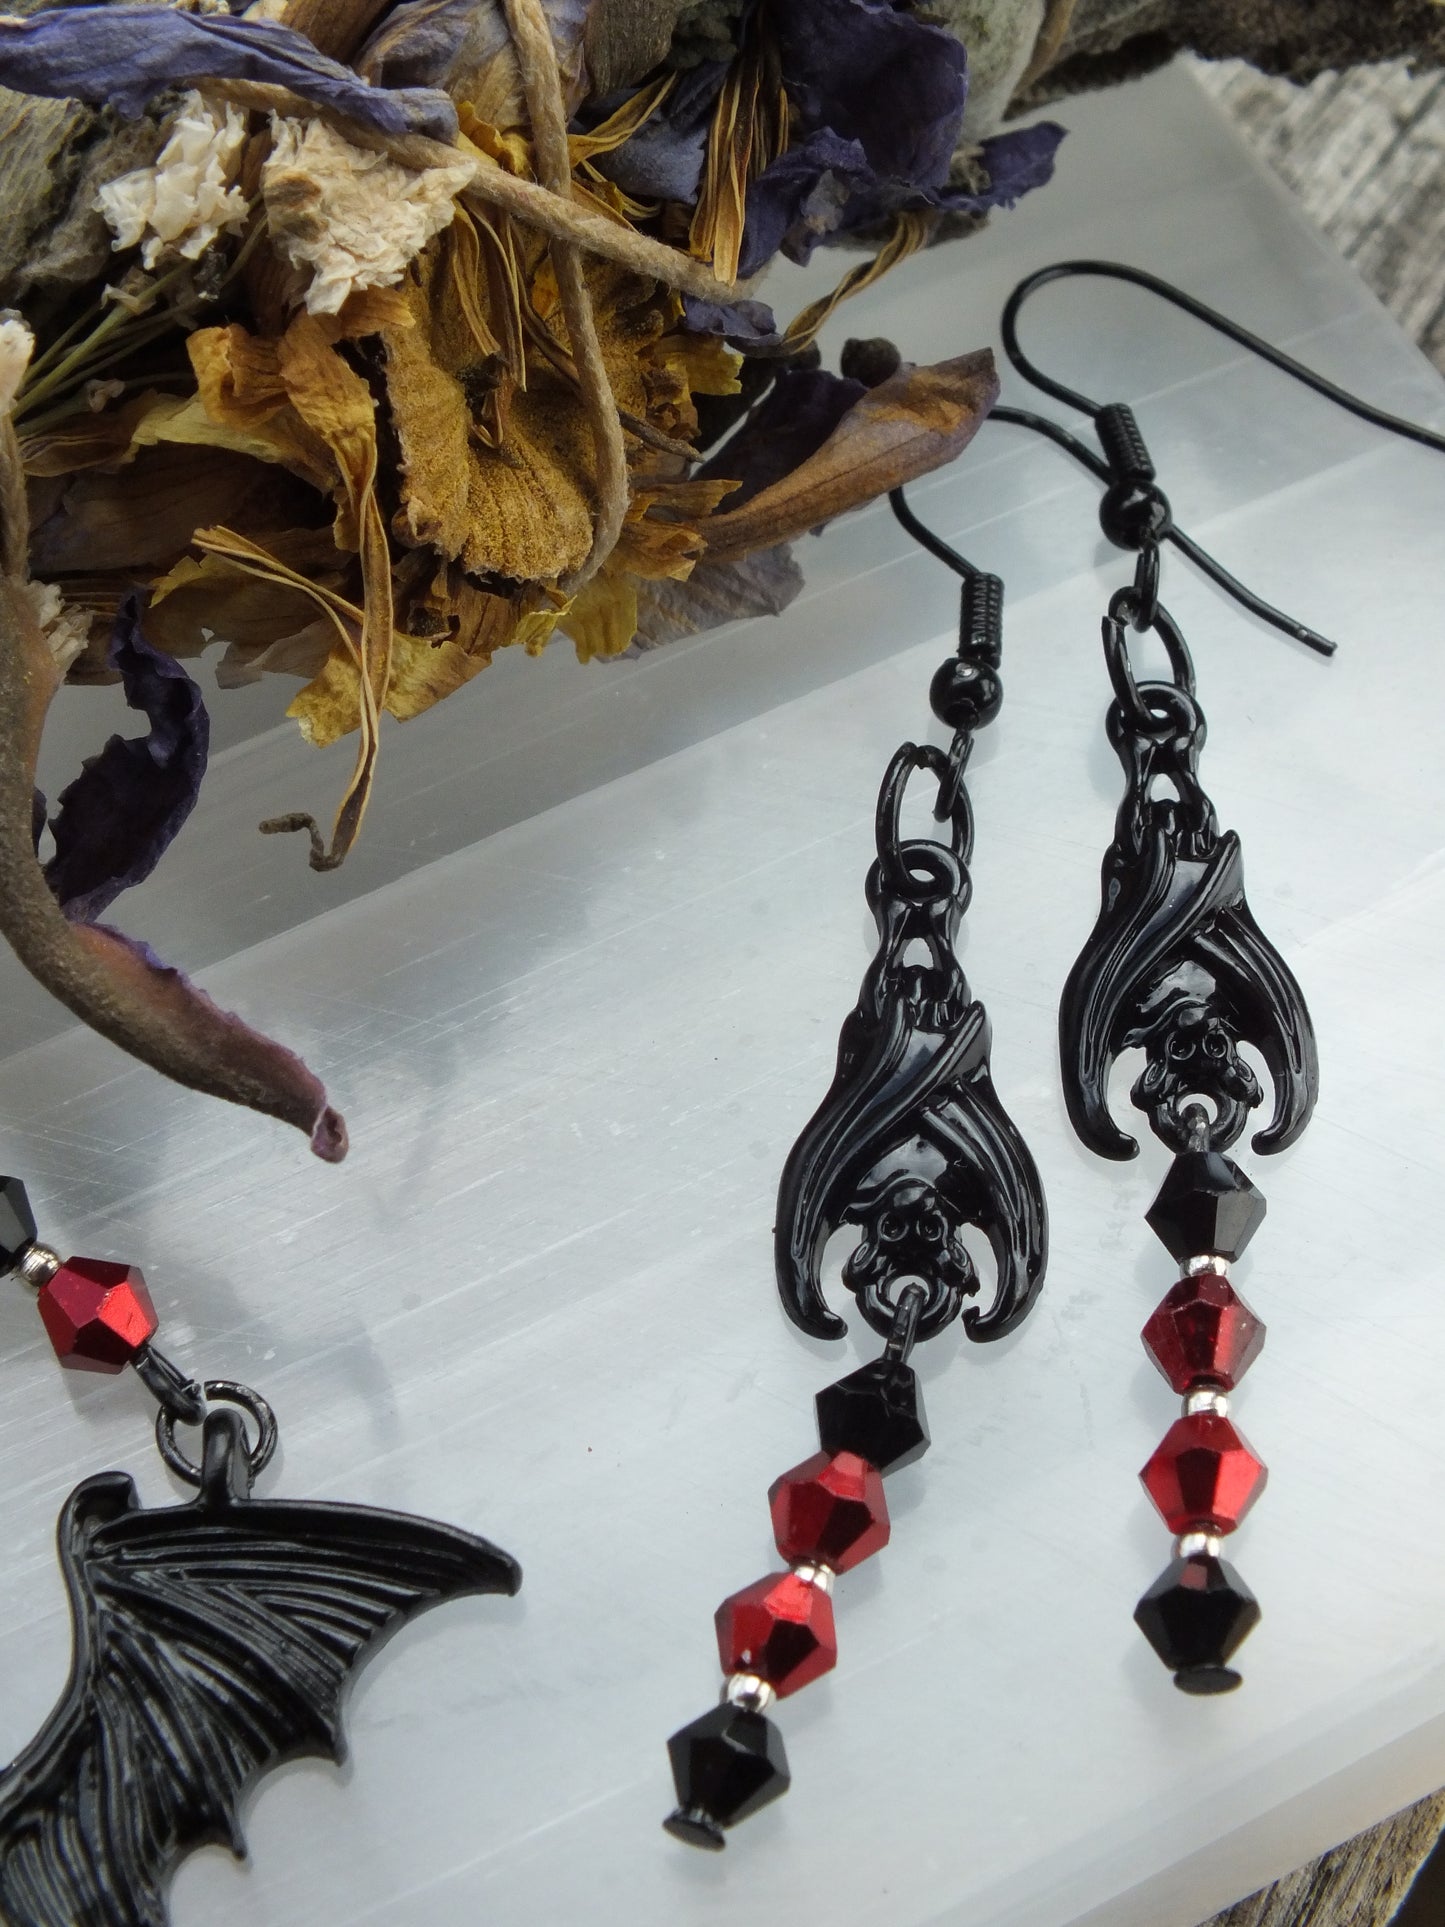 Red & Black Bat Necklace & Earring Set